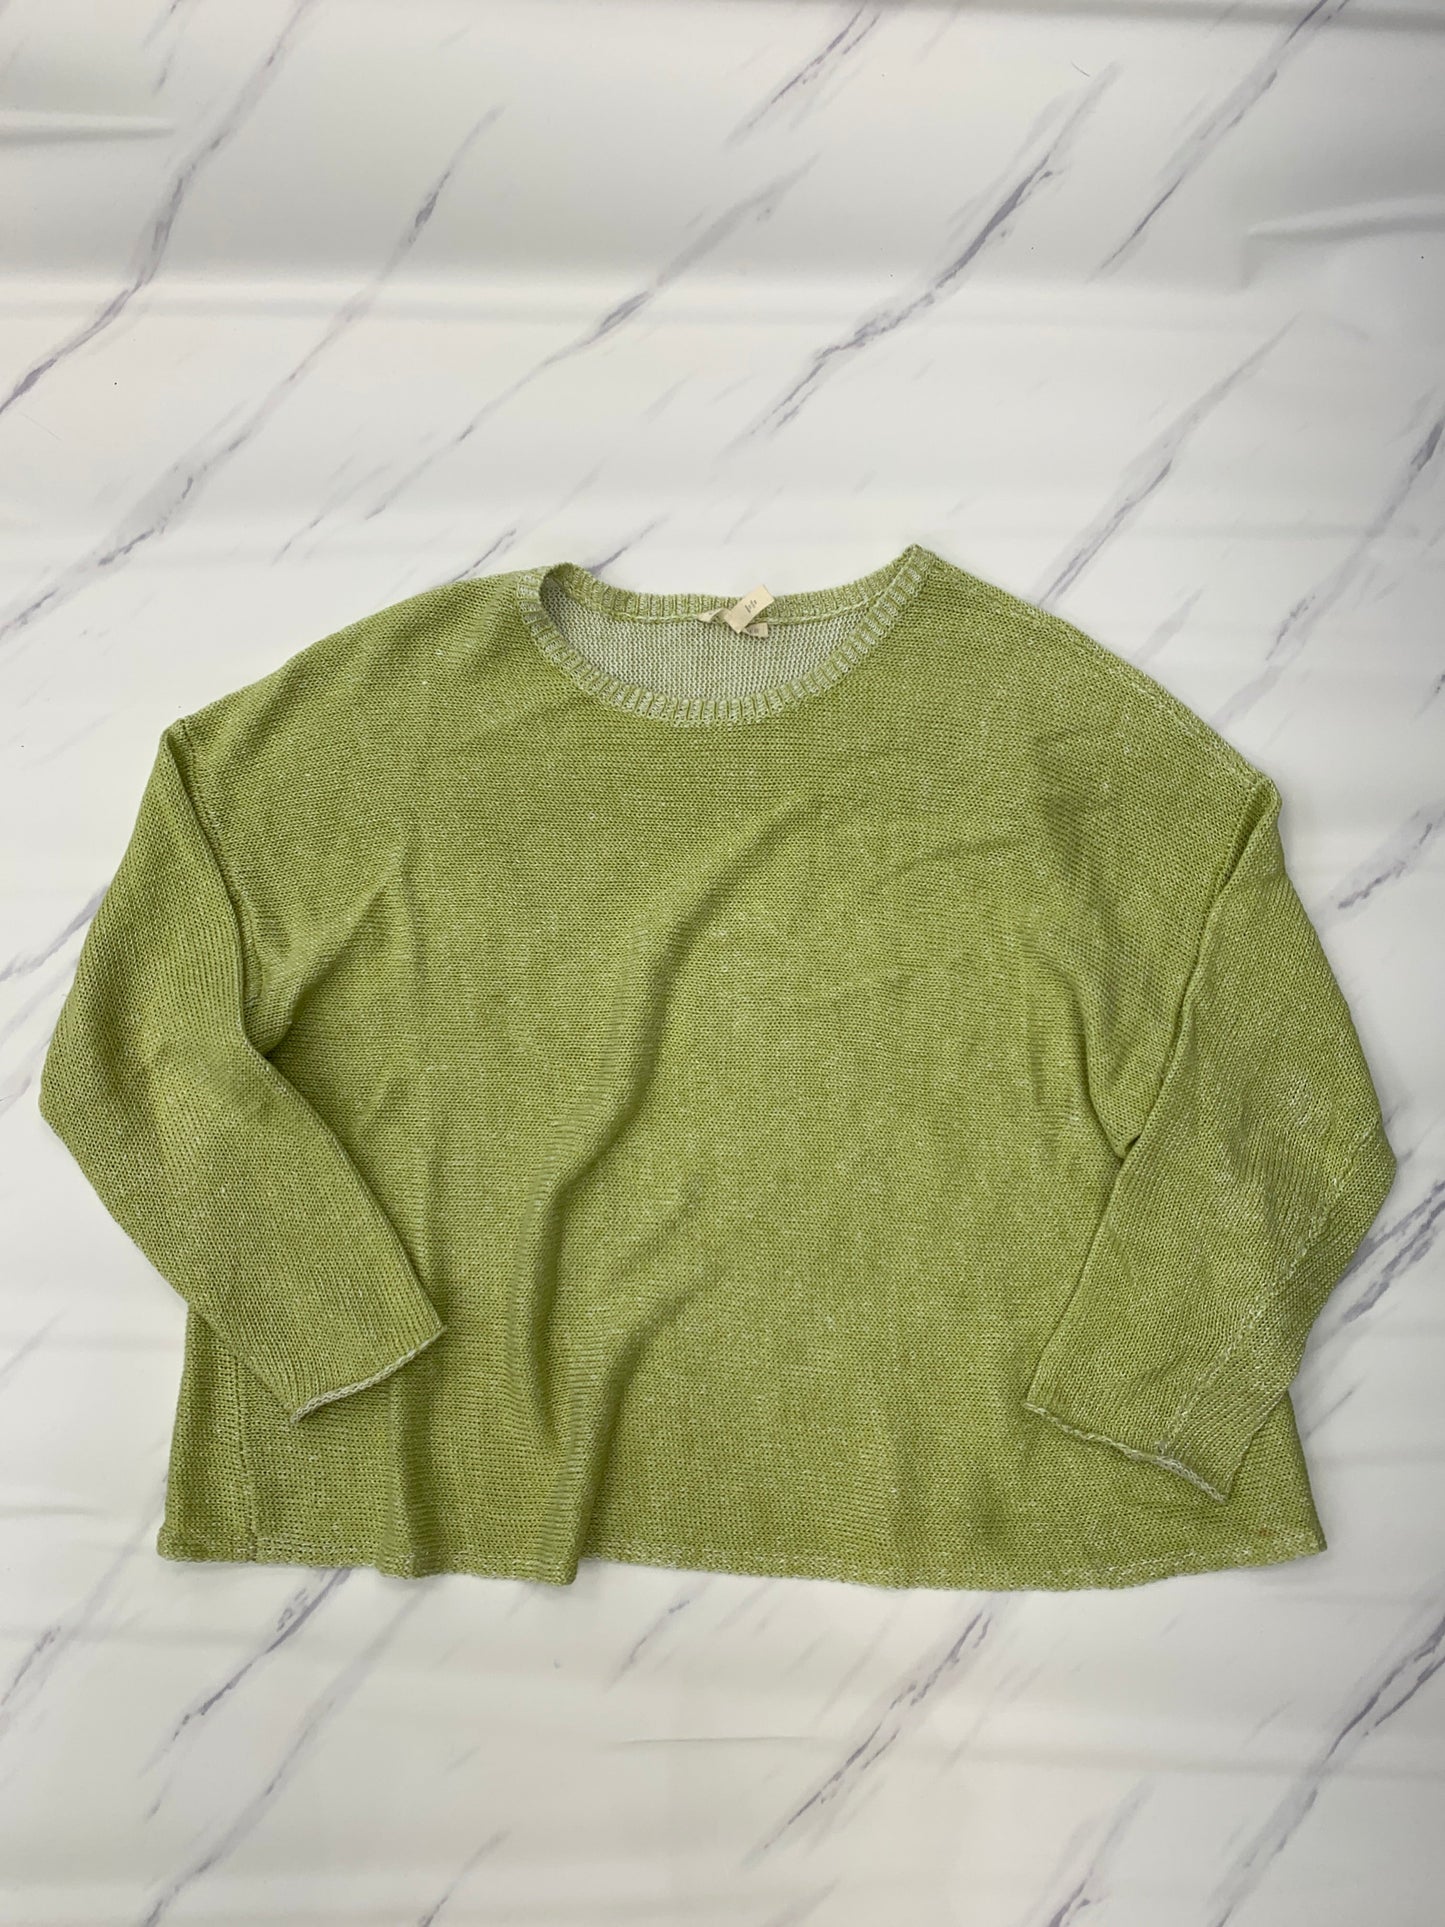 Sweater Designer By Eileen Fisher  Size: Xl